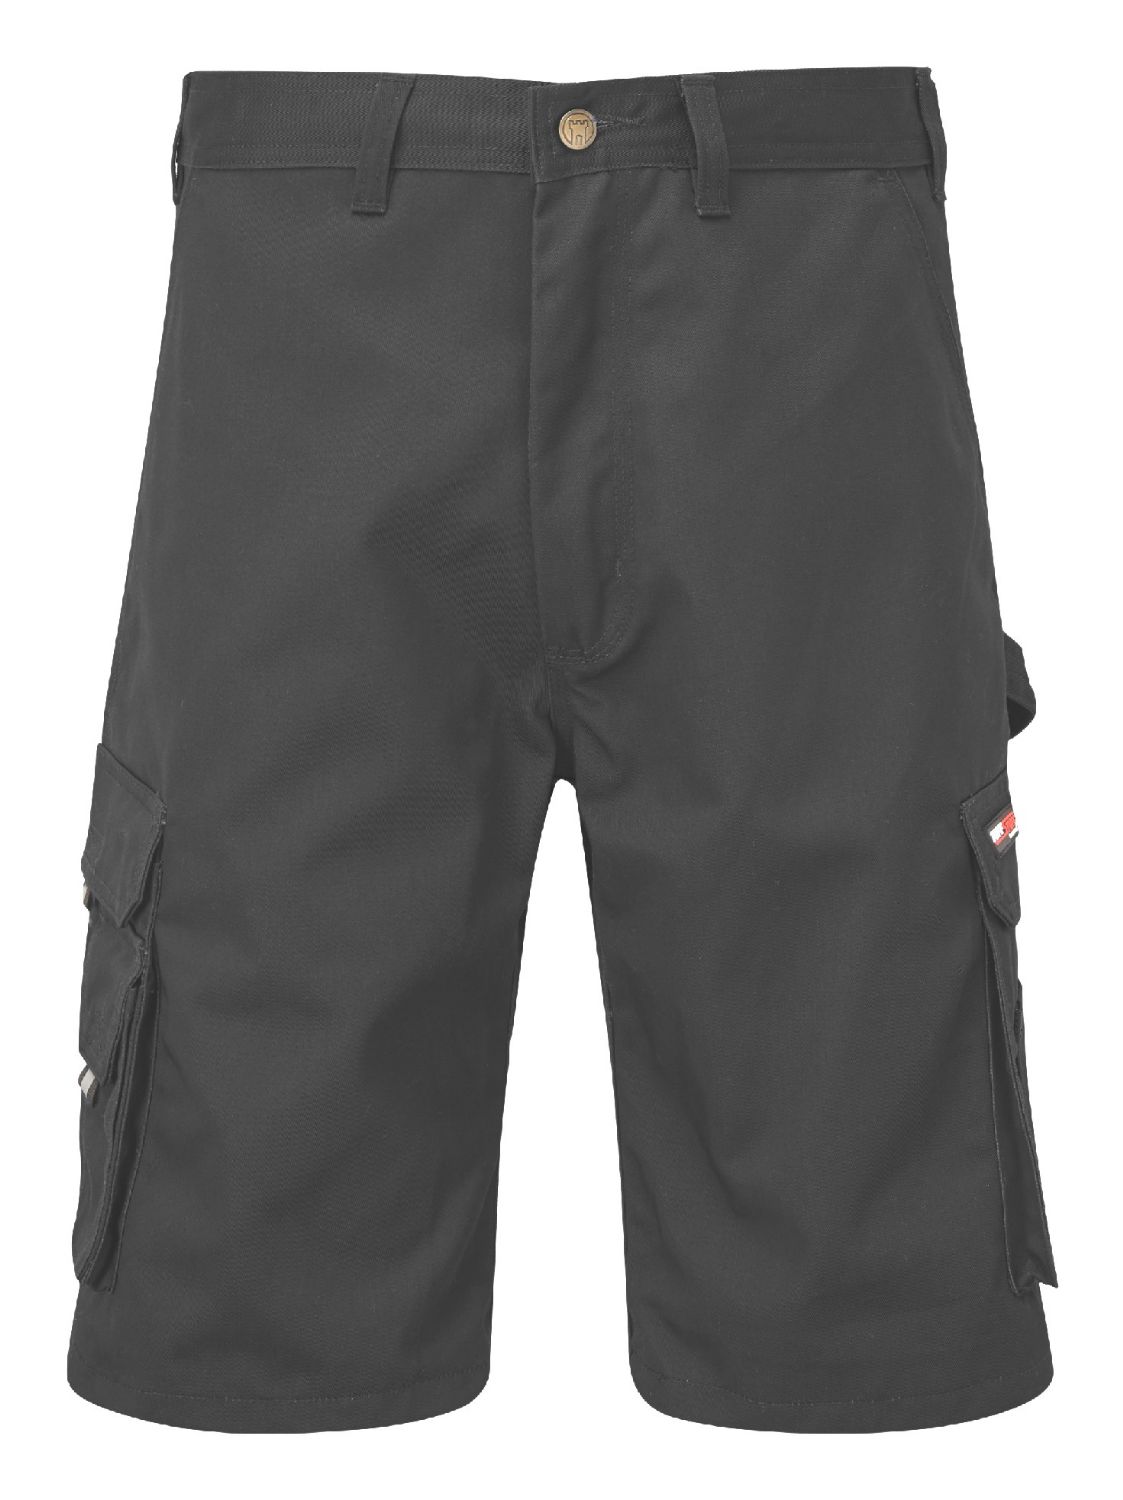 Tuffstuff Shorts 811 Black size 38